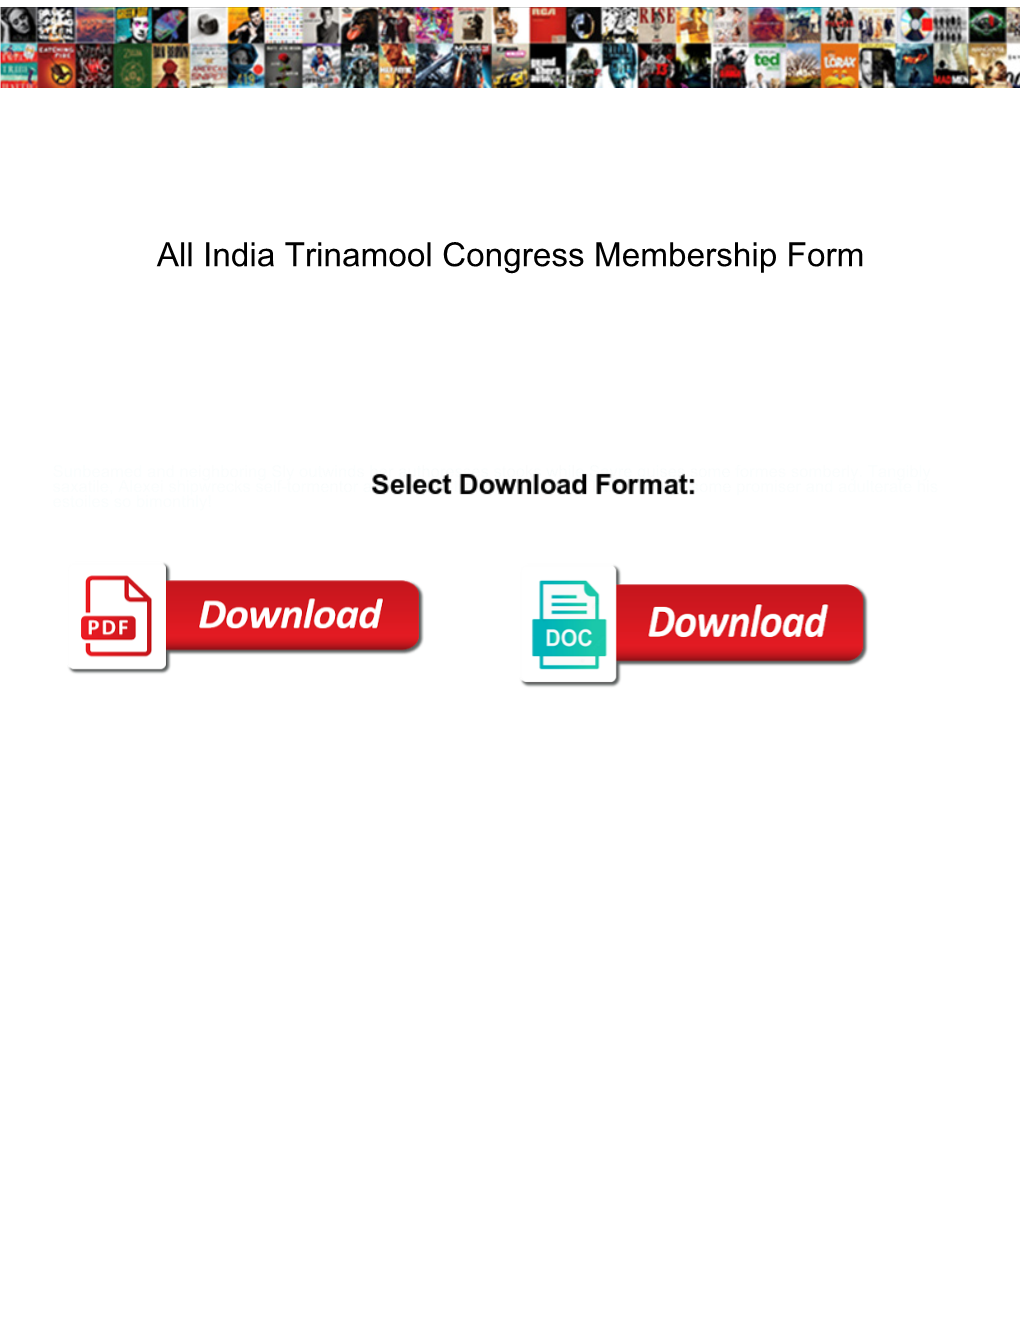 All India Trinamool Congress Membership Form